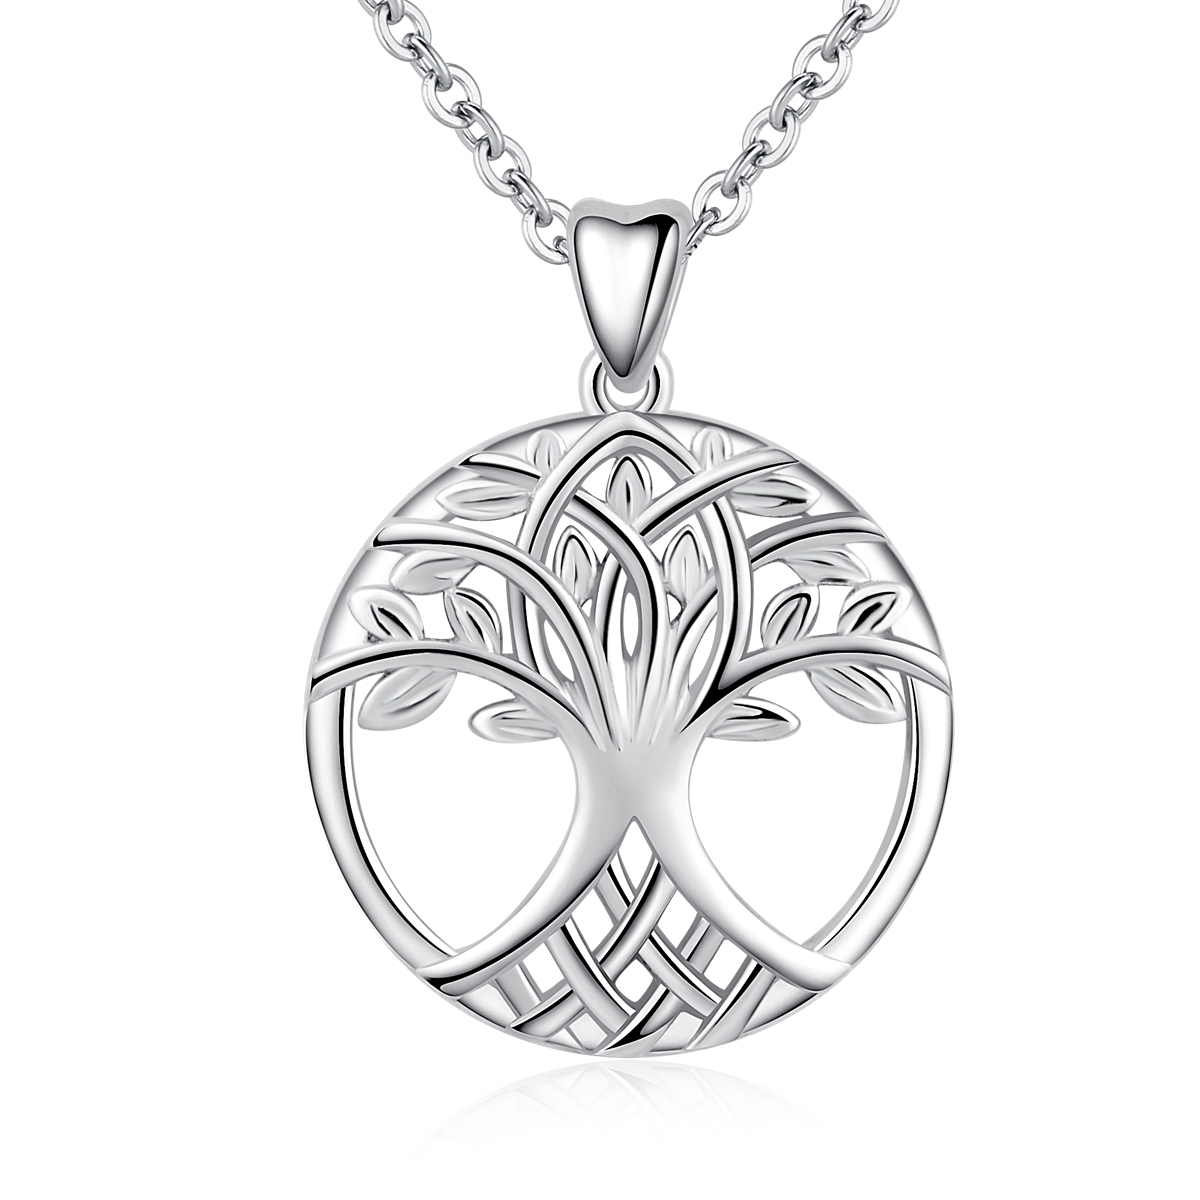 Merryshine Jewelry Rhodium Plated Fastness Family Tree Pendant Tree of Life Necklace